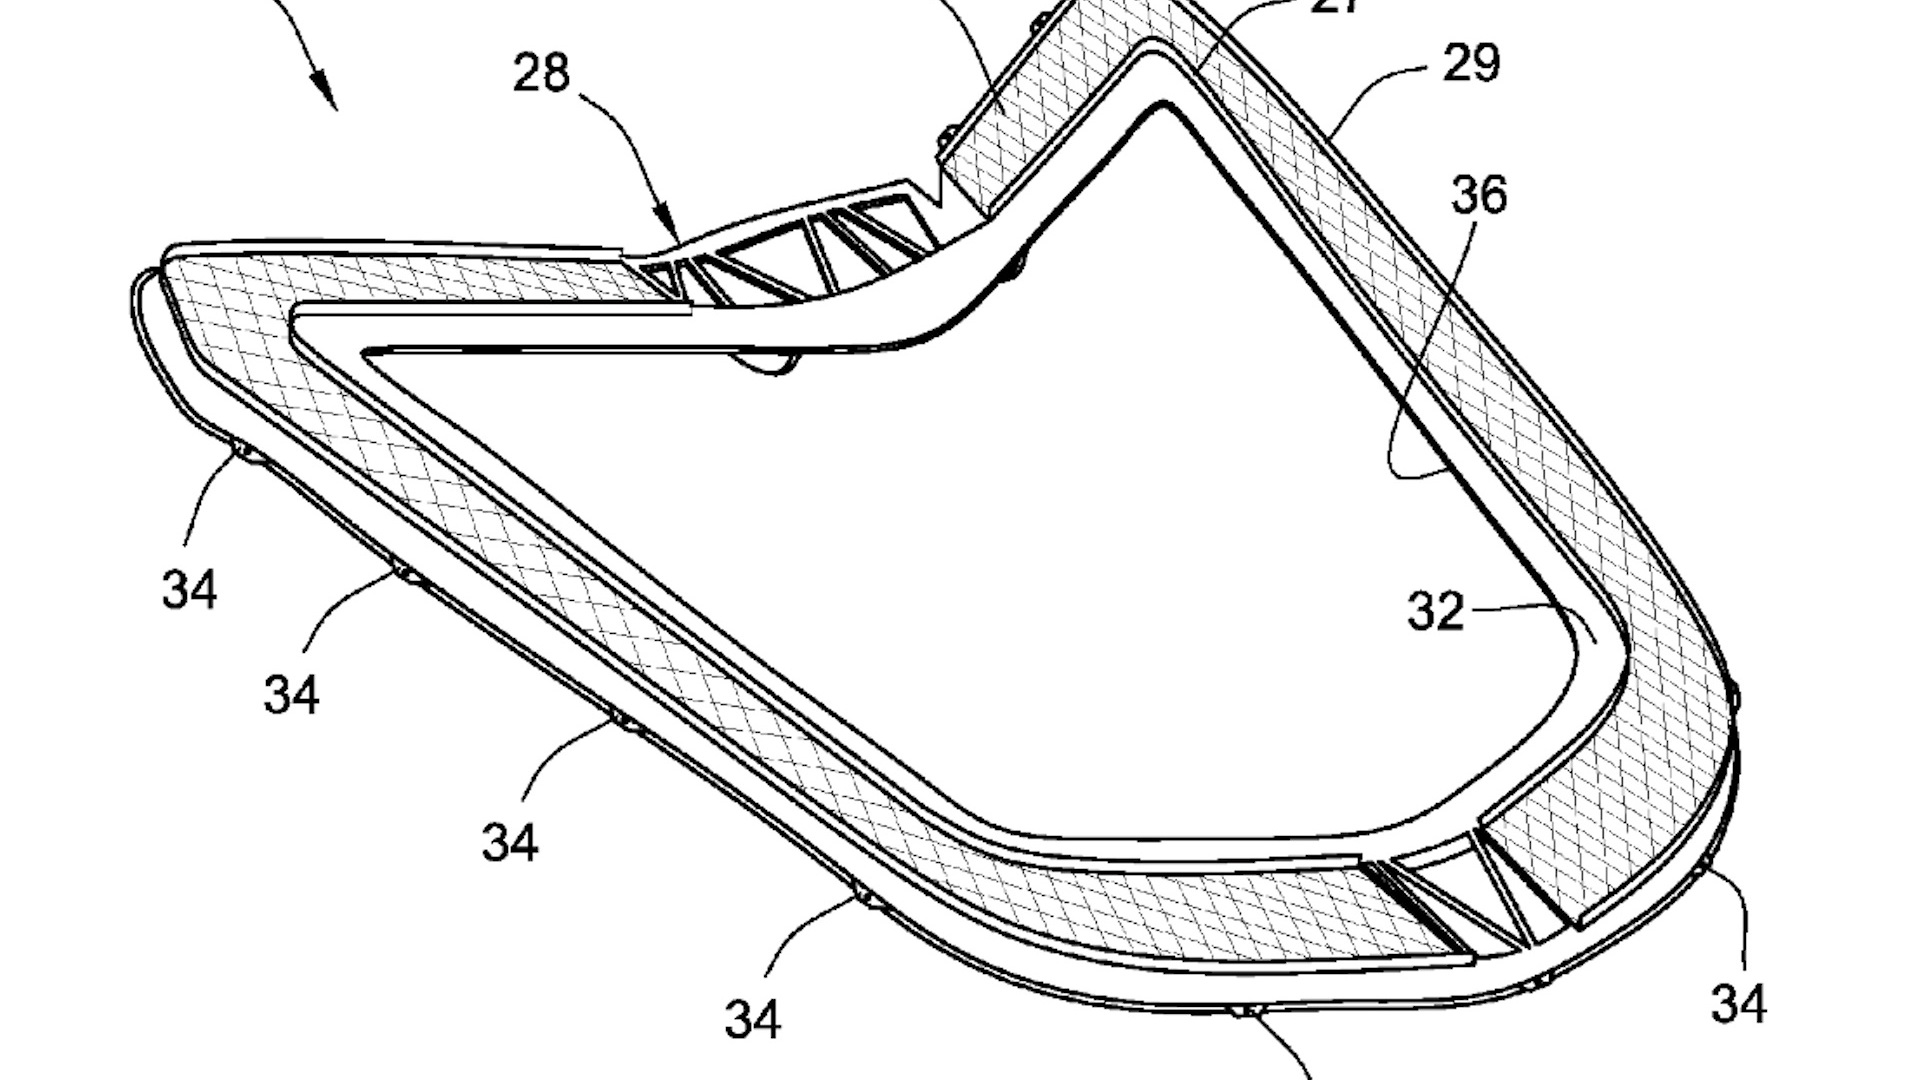 2020 Chevrolet Corvette engine hatch cover patent image